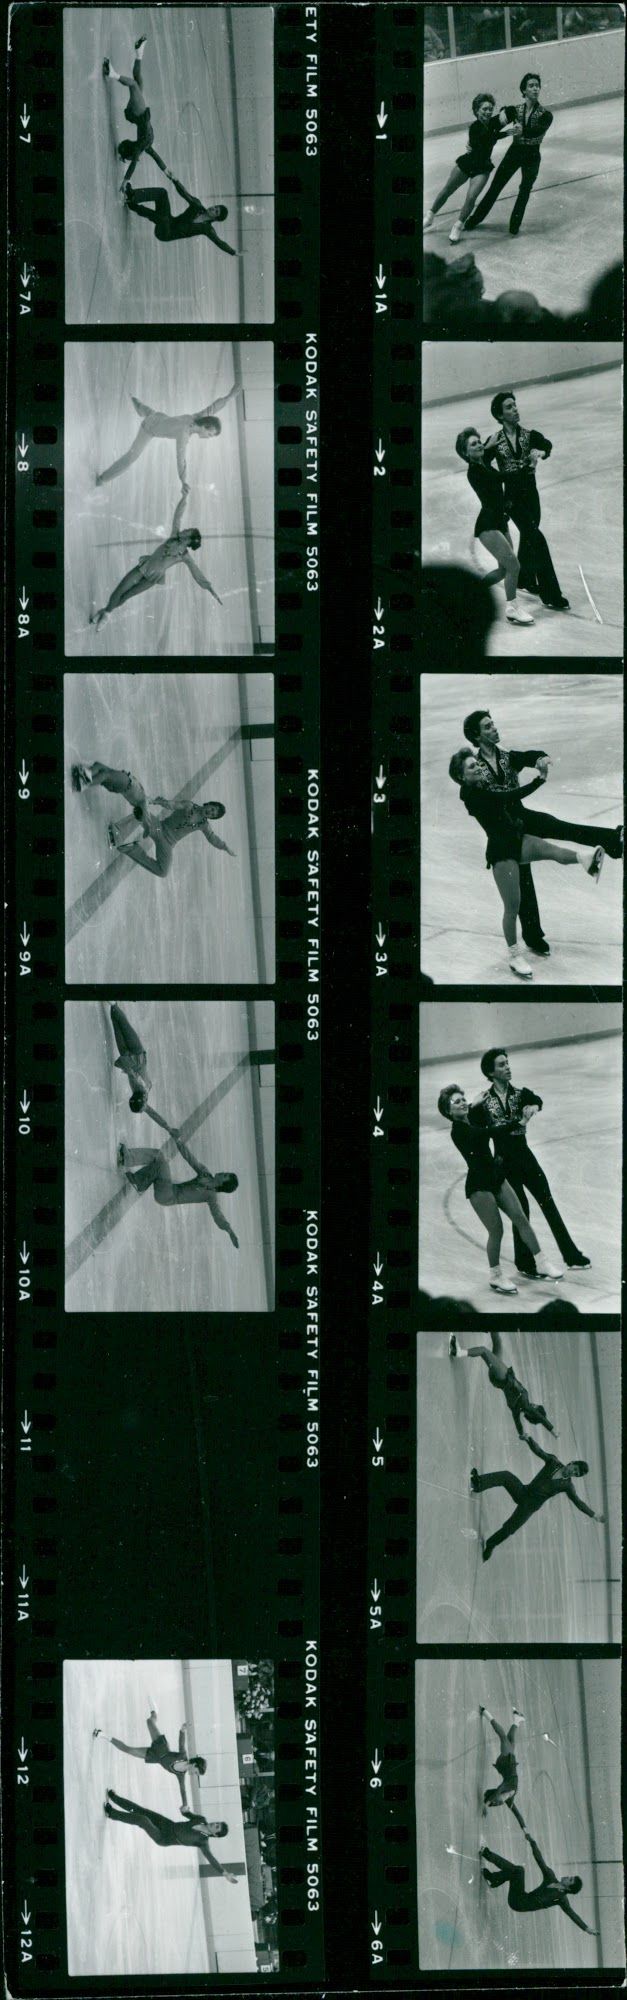 CAUF ISSUES OLYMPIAD HEKS CHR BERLI CUBORHS KTO ISS FILM - Vintage Photograph